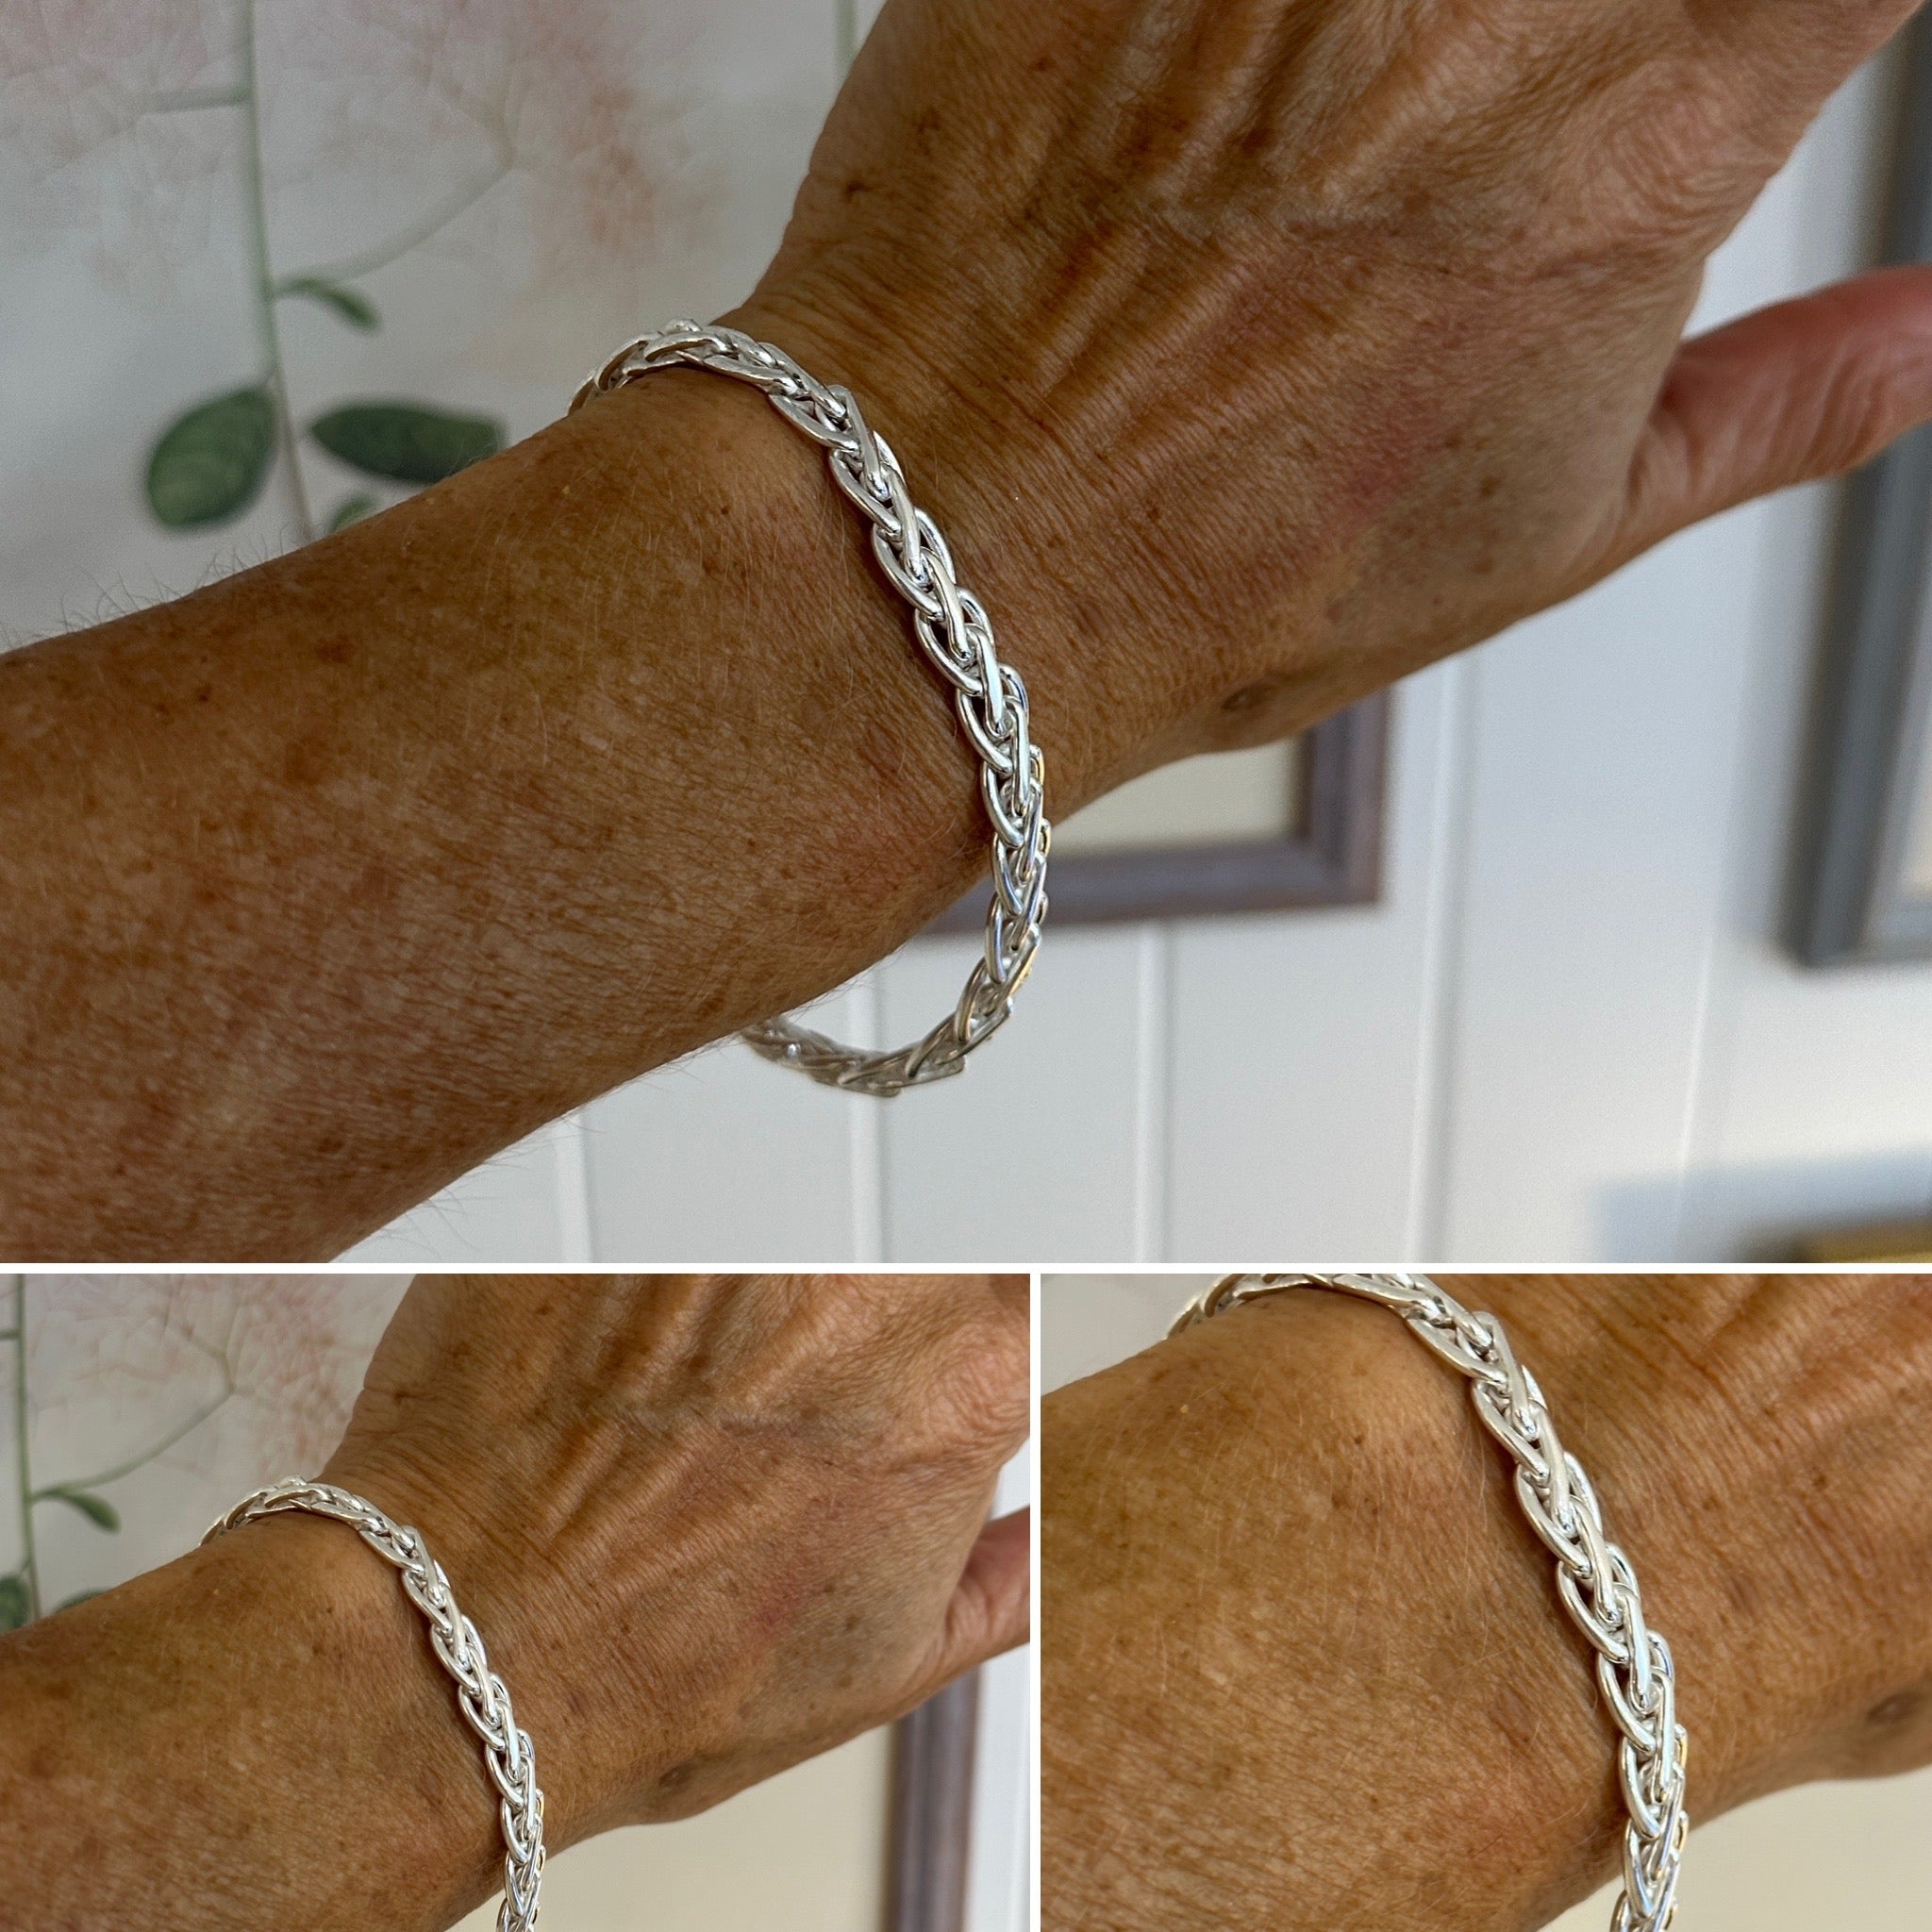 Roisin: a silver bracelet